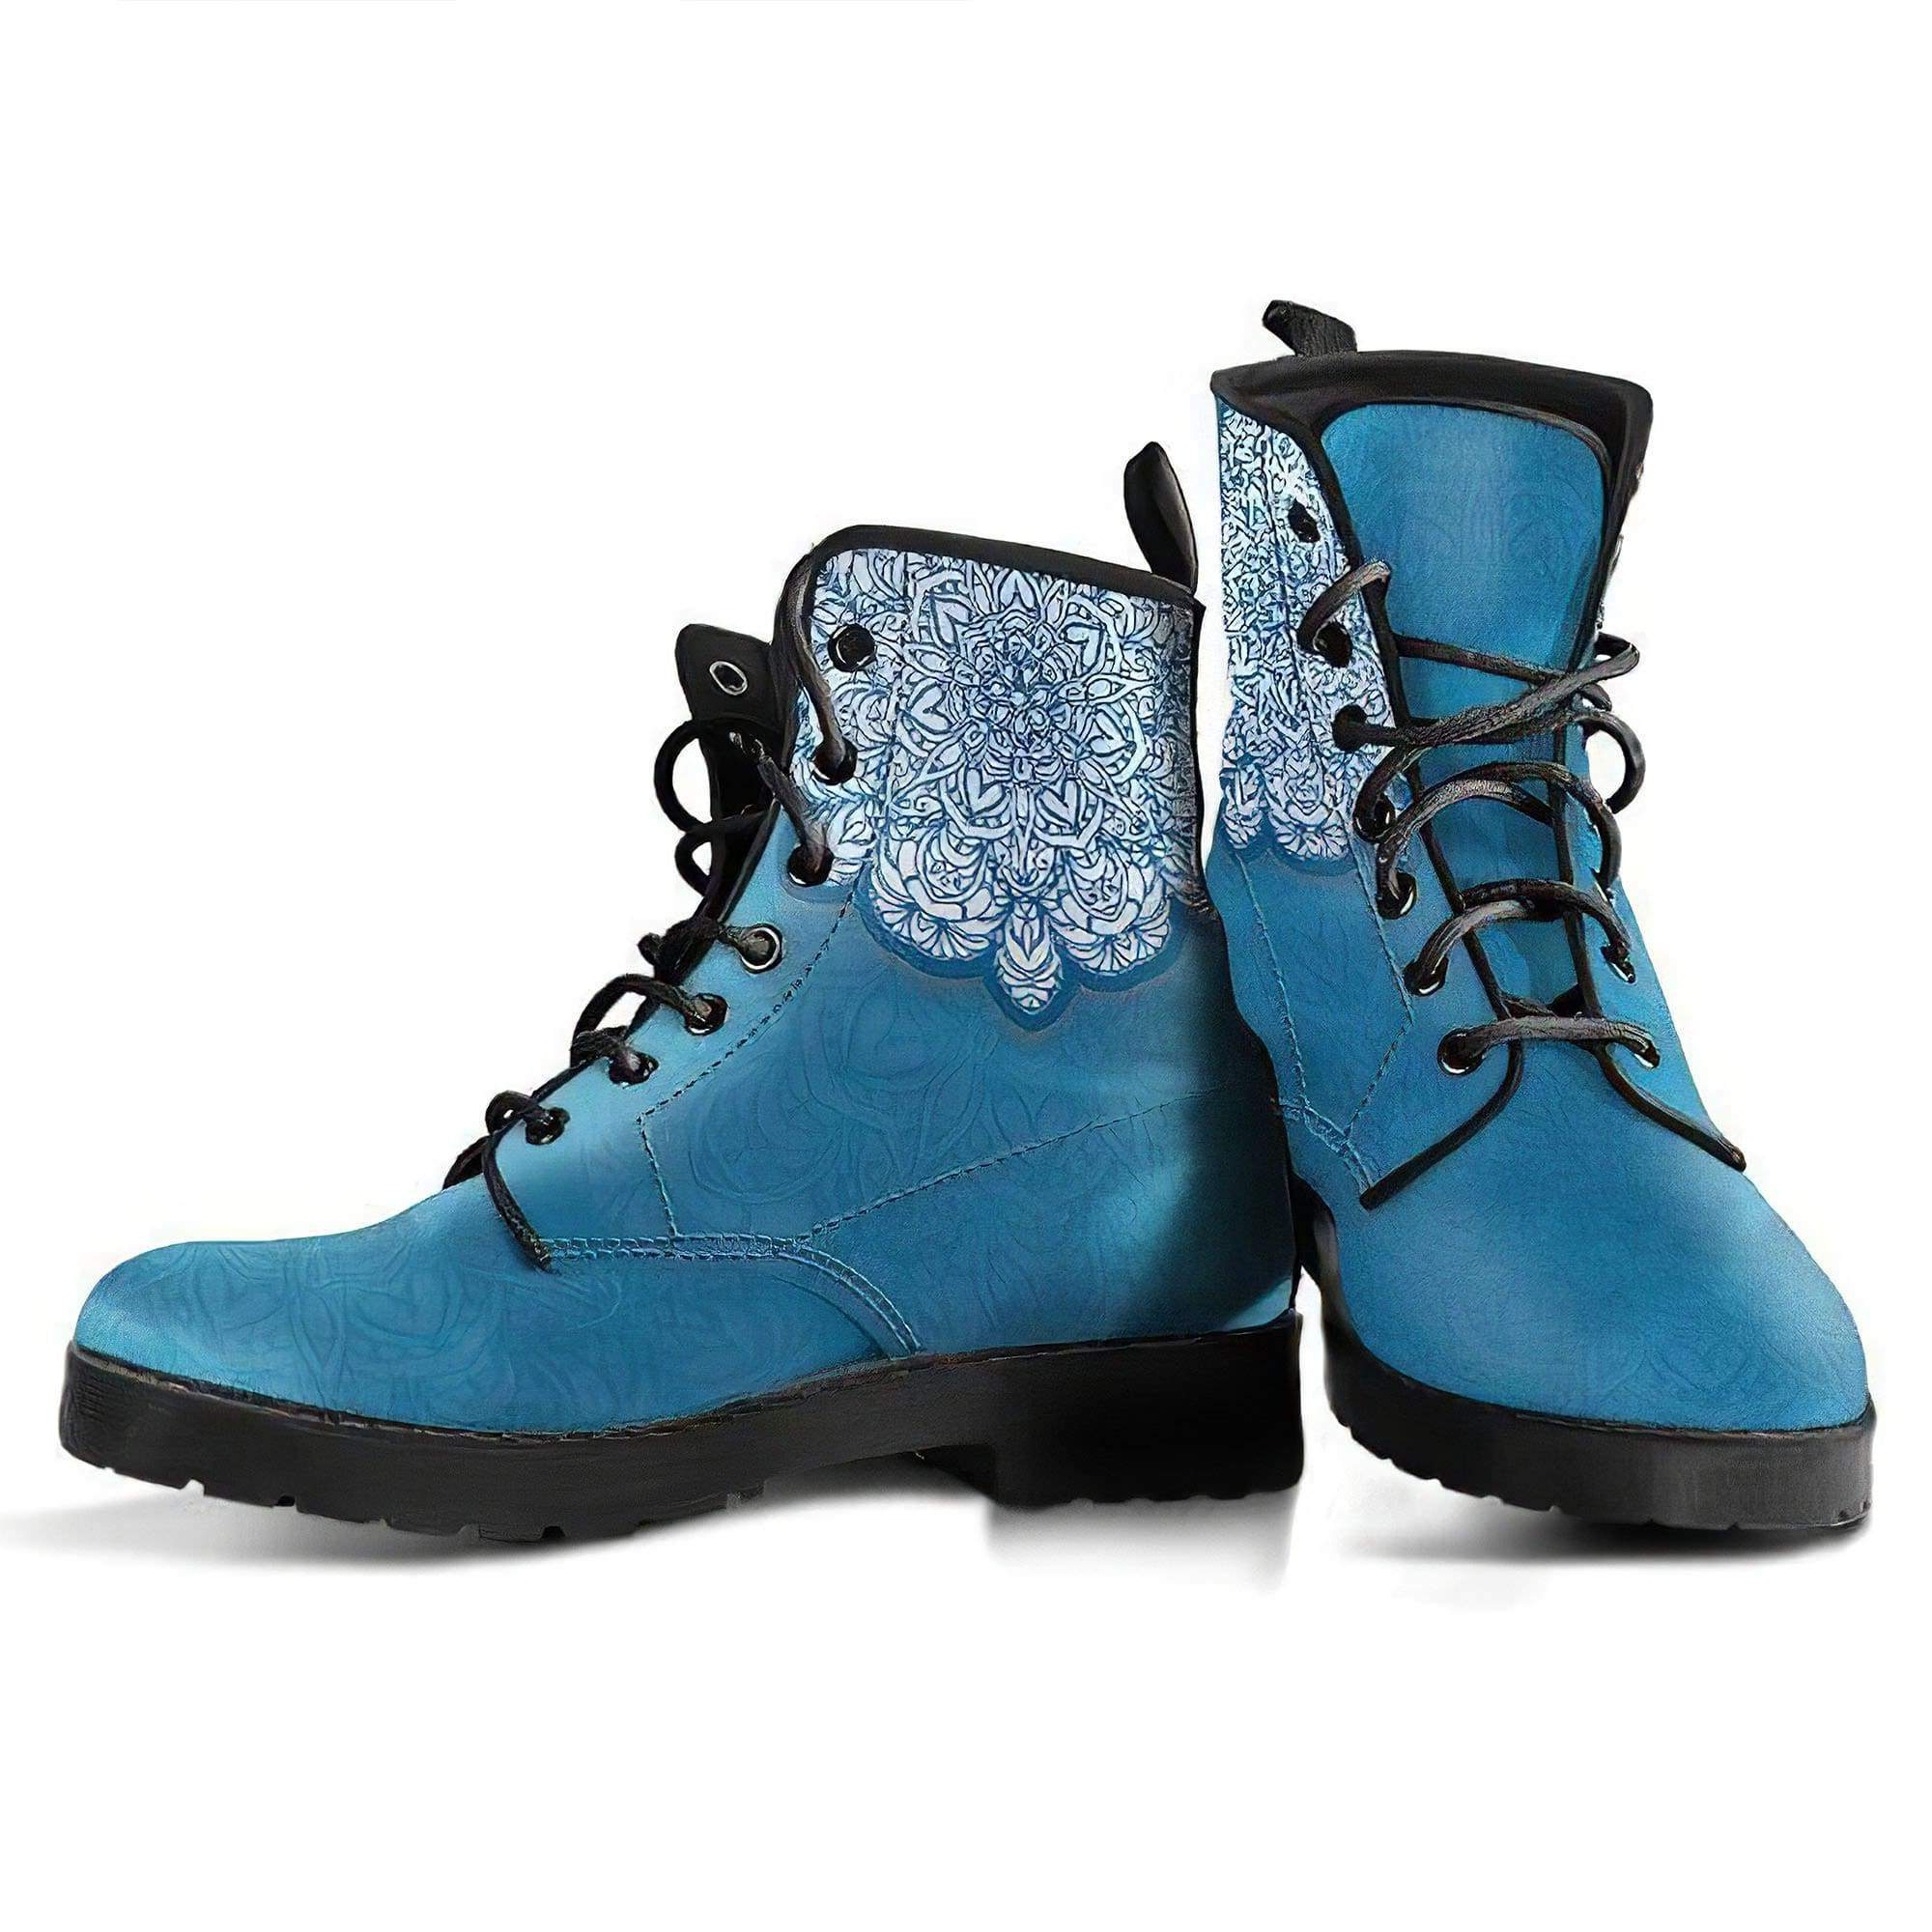 mandala-women-s-leather-boots-women-s-leather-boots-12051909378109.jpg